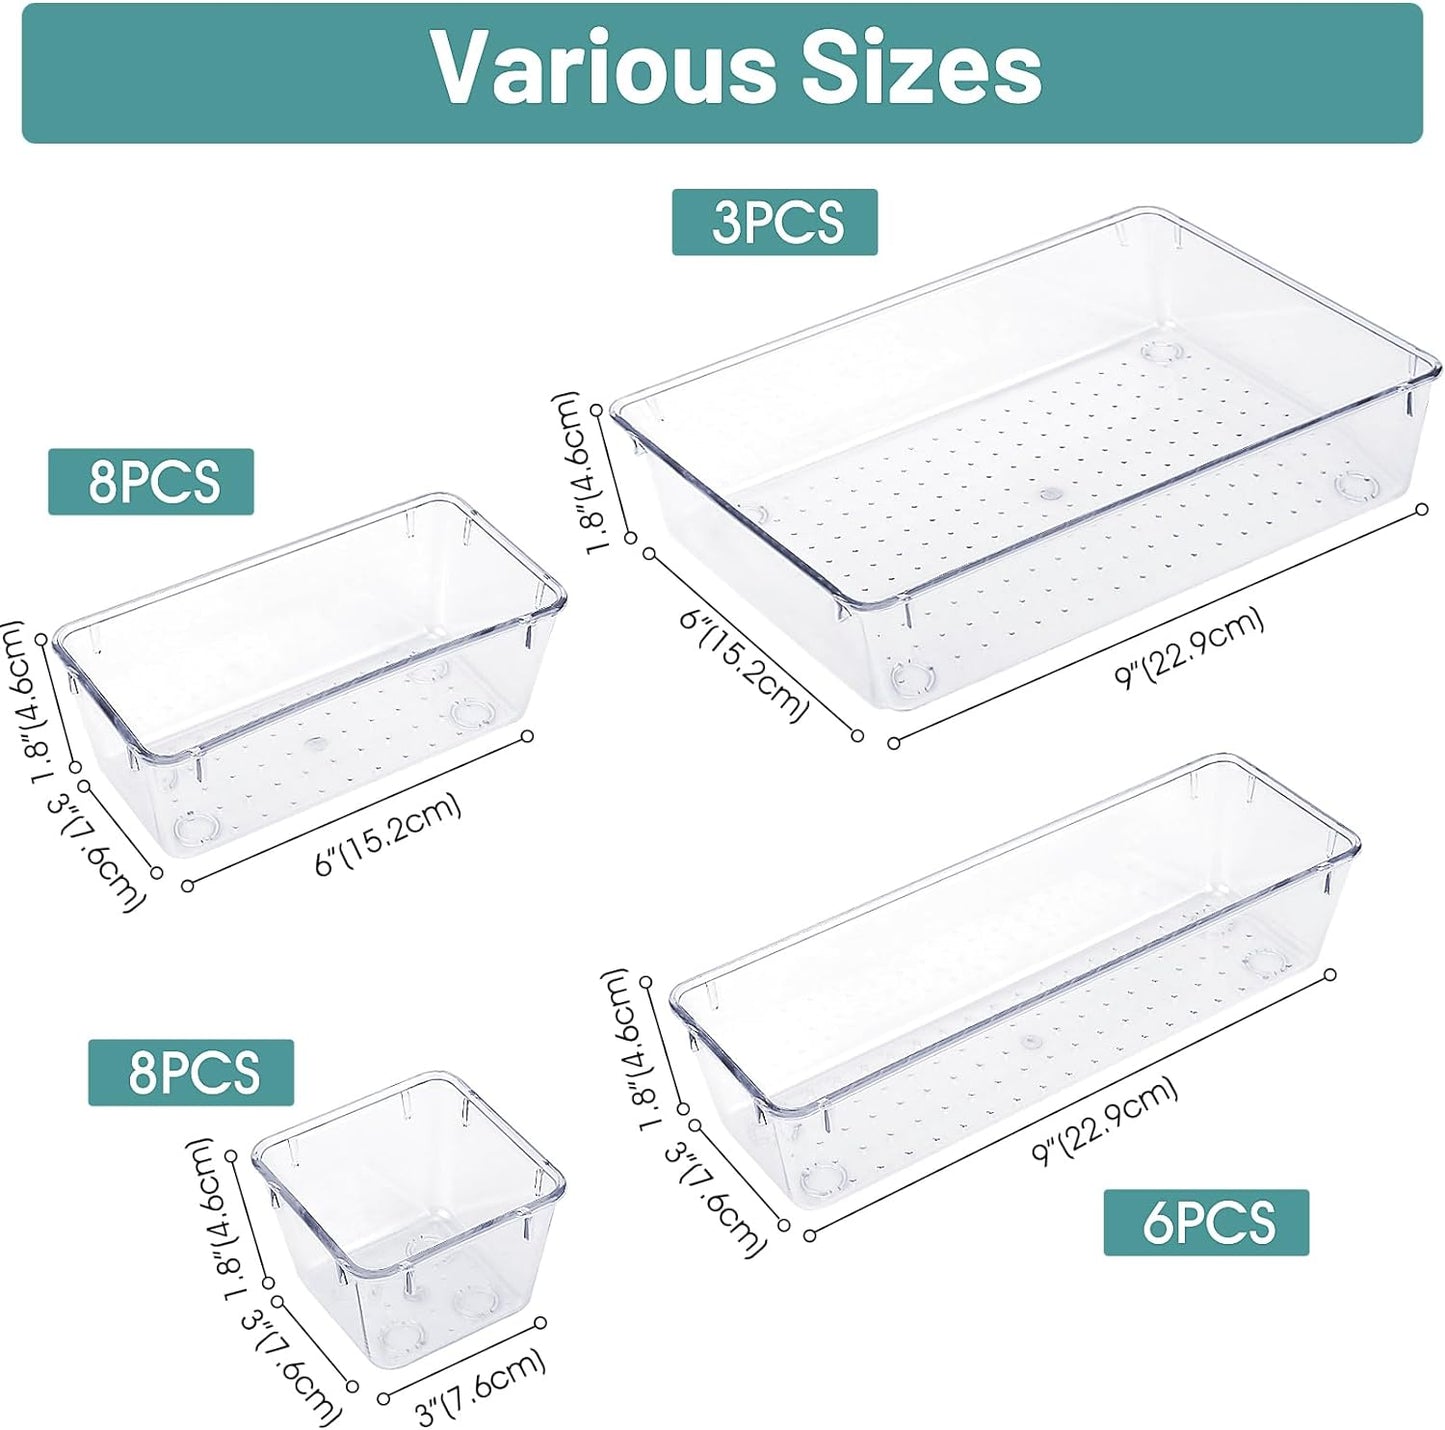 Premium Clear Plastic Drawer Organizer Set -Multi Size